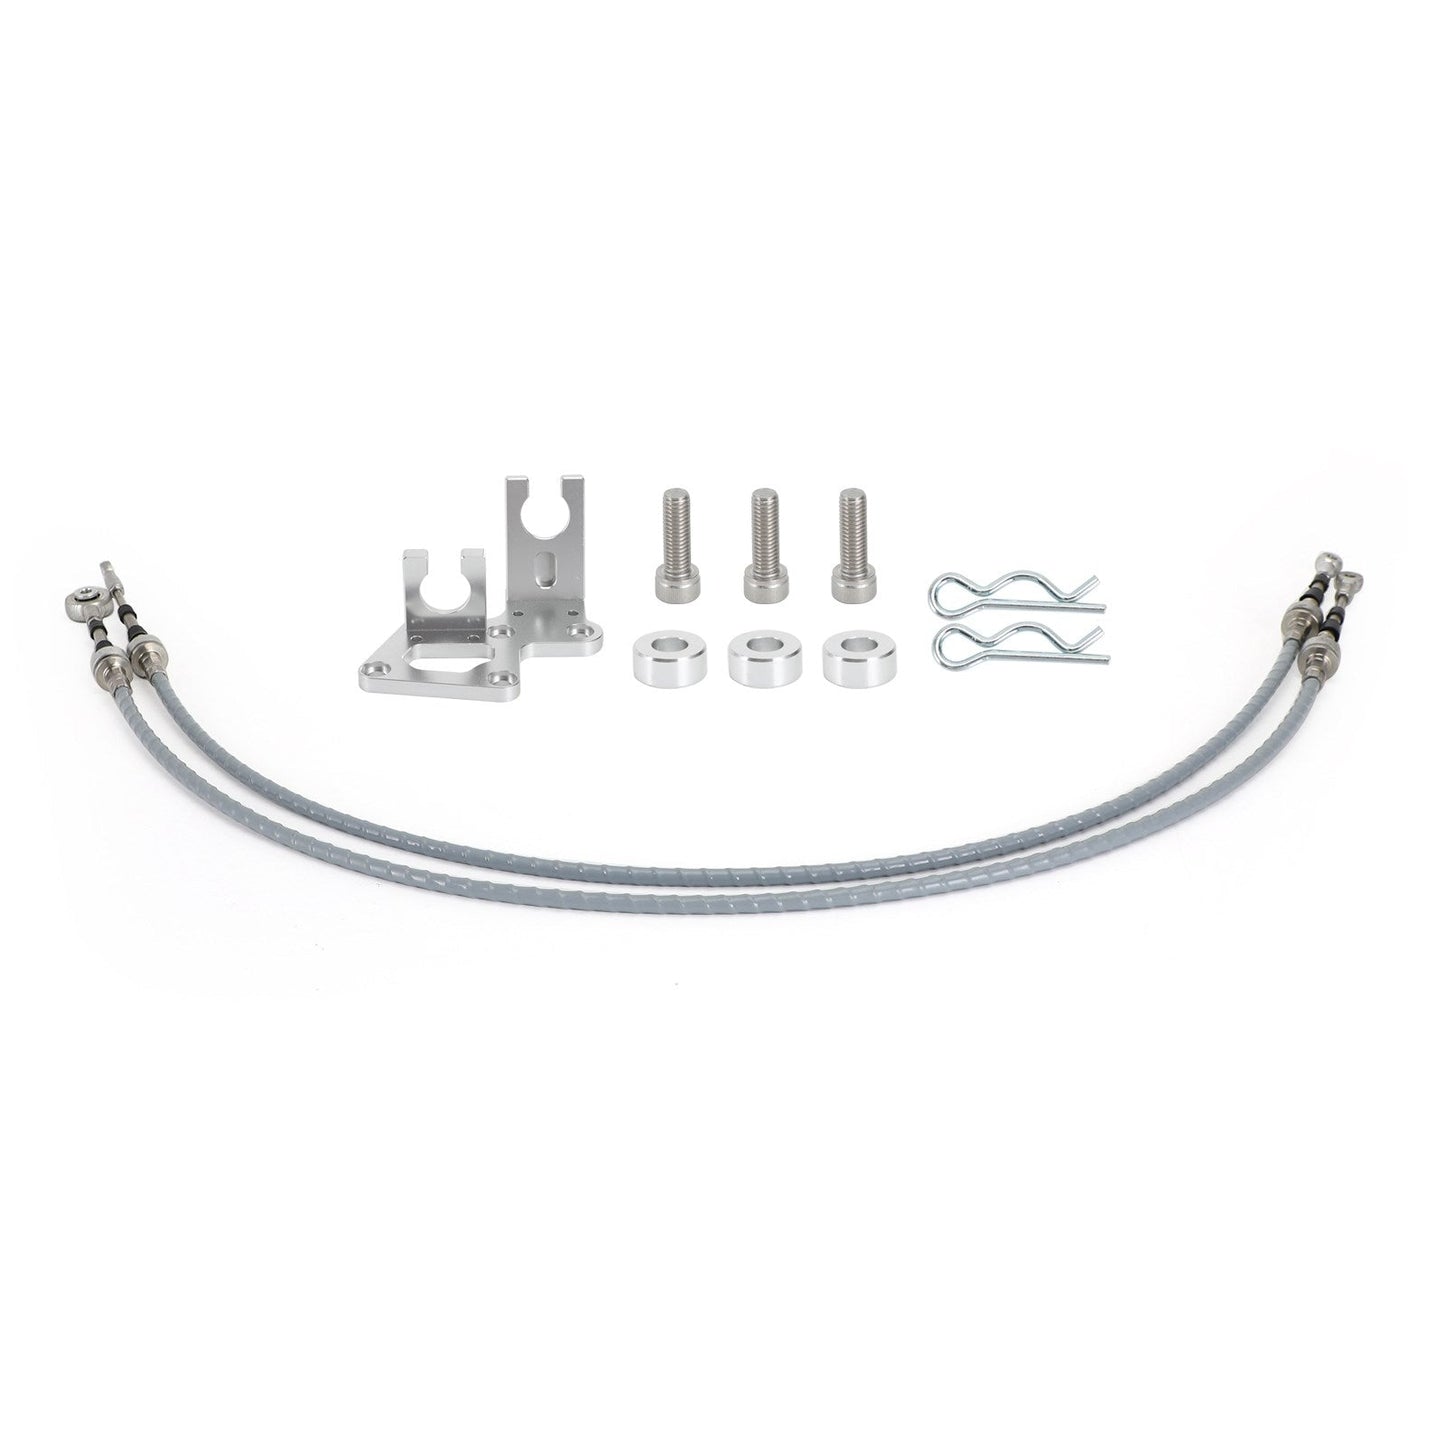 Shifter Cables & Trans Bracket For Acura RSX K20 K20A K24 KSwap Series EG EK DC2